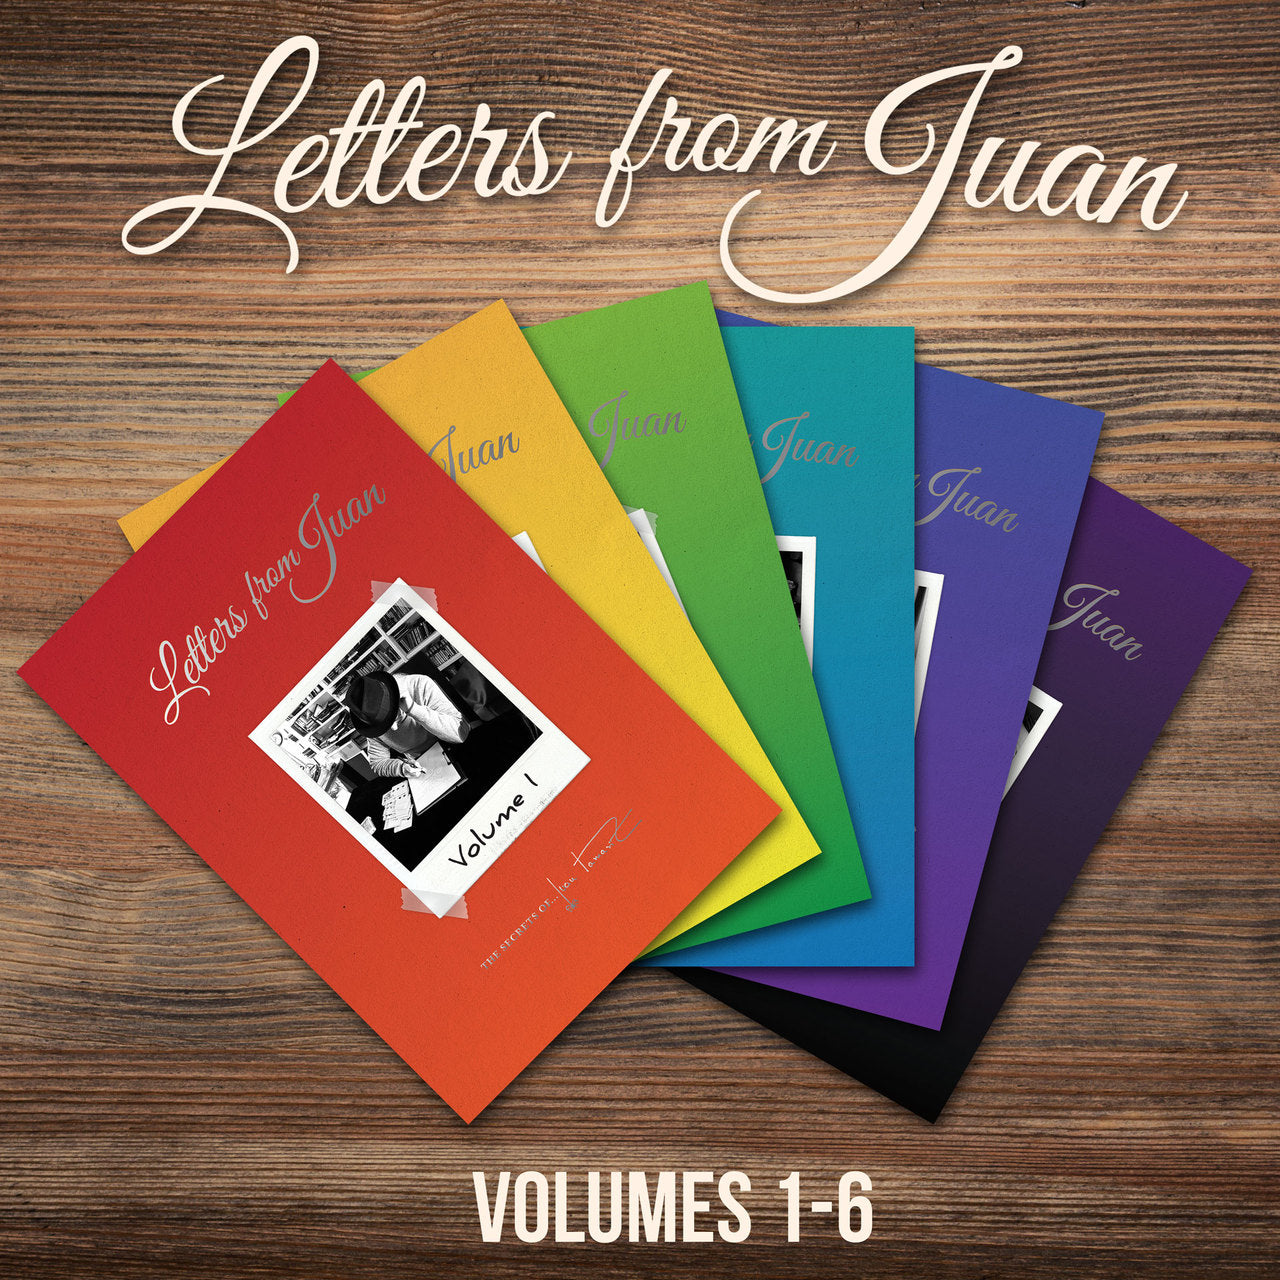 Letters From Juan by Juan Tamariz (Volumes 1-6)